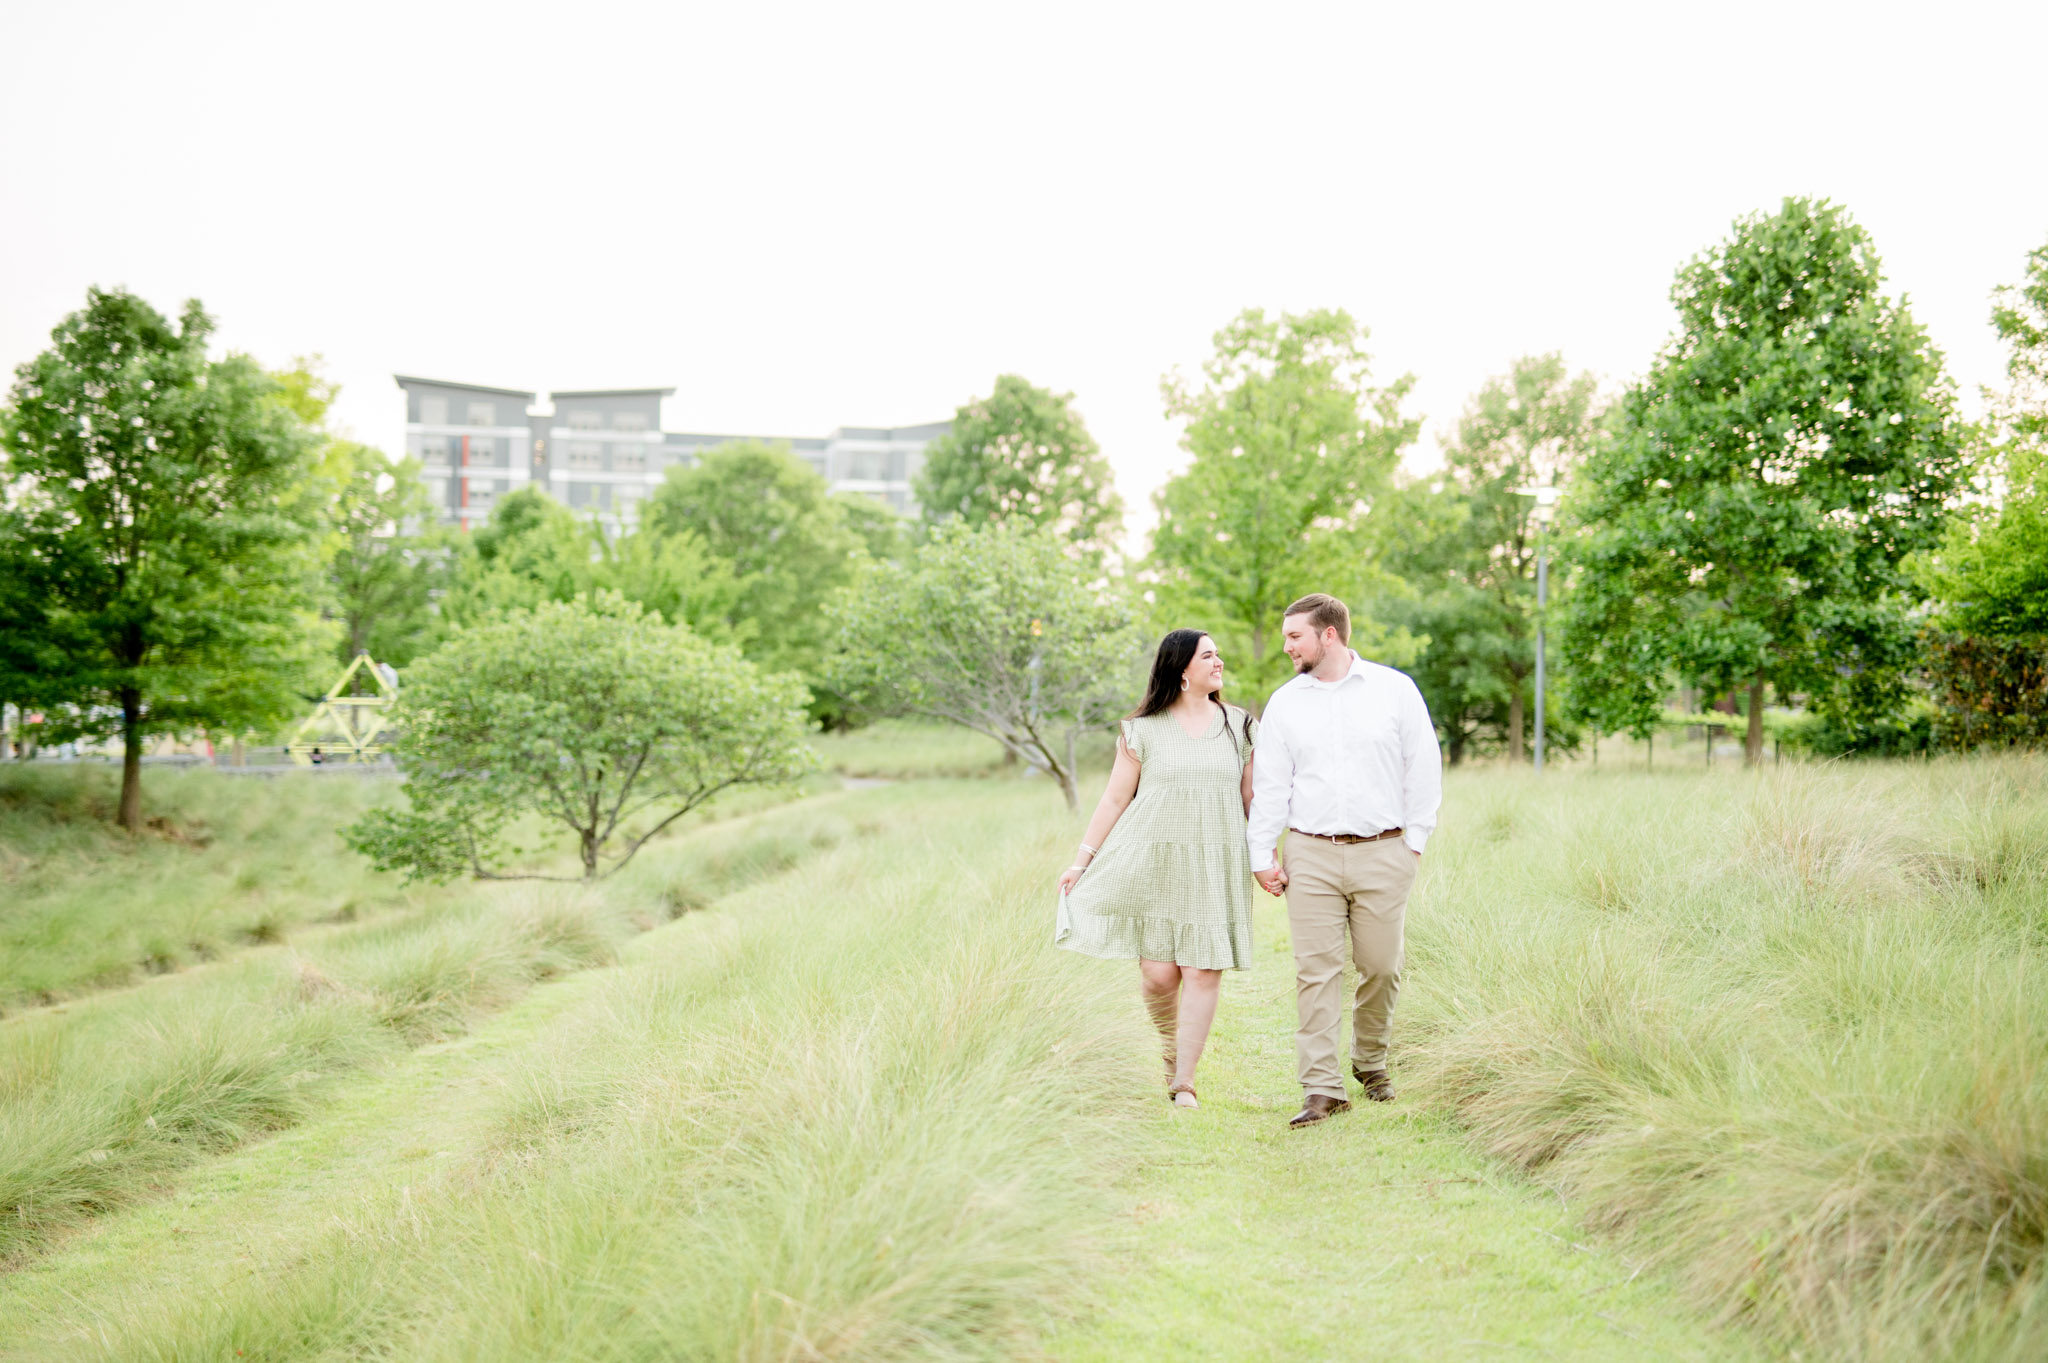 Couple walks through grassy field.